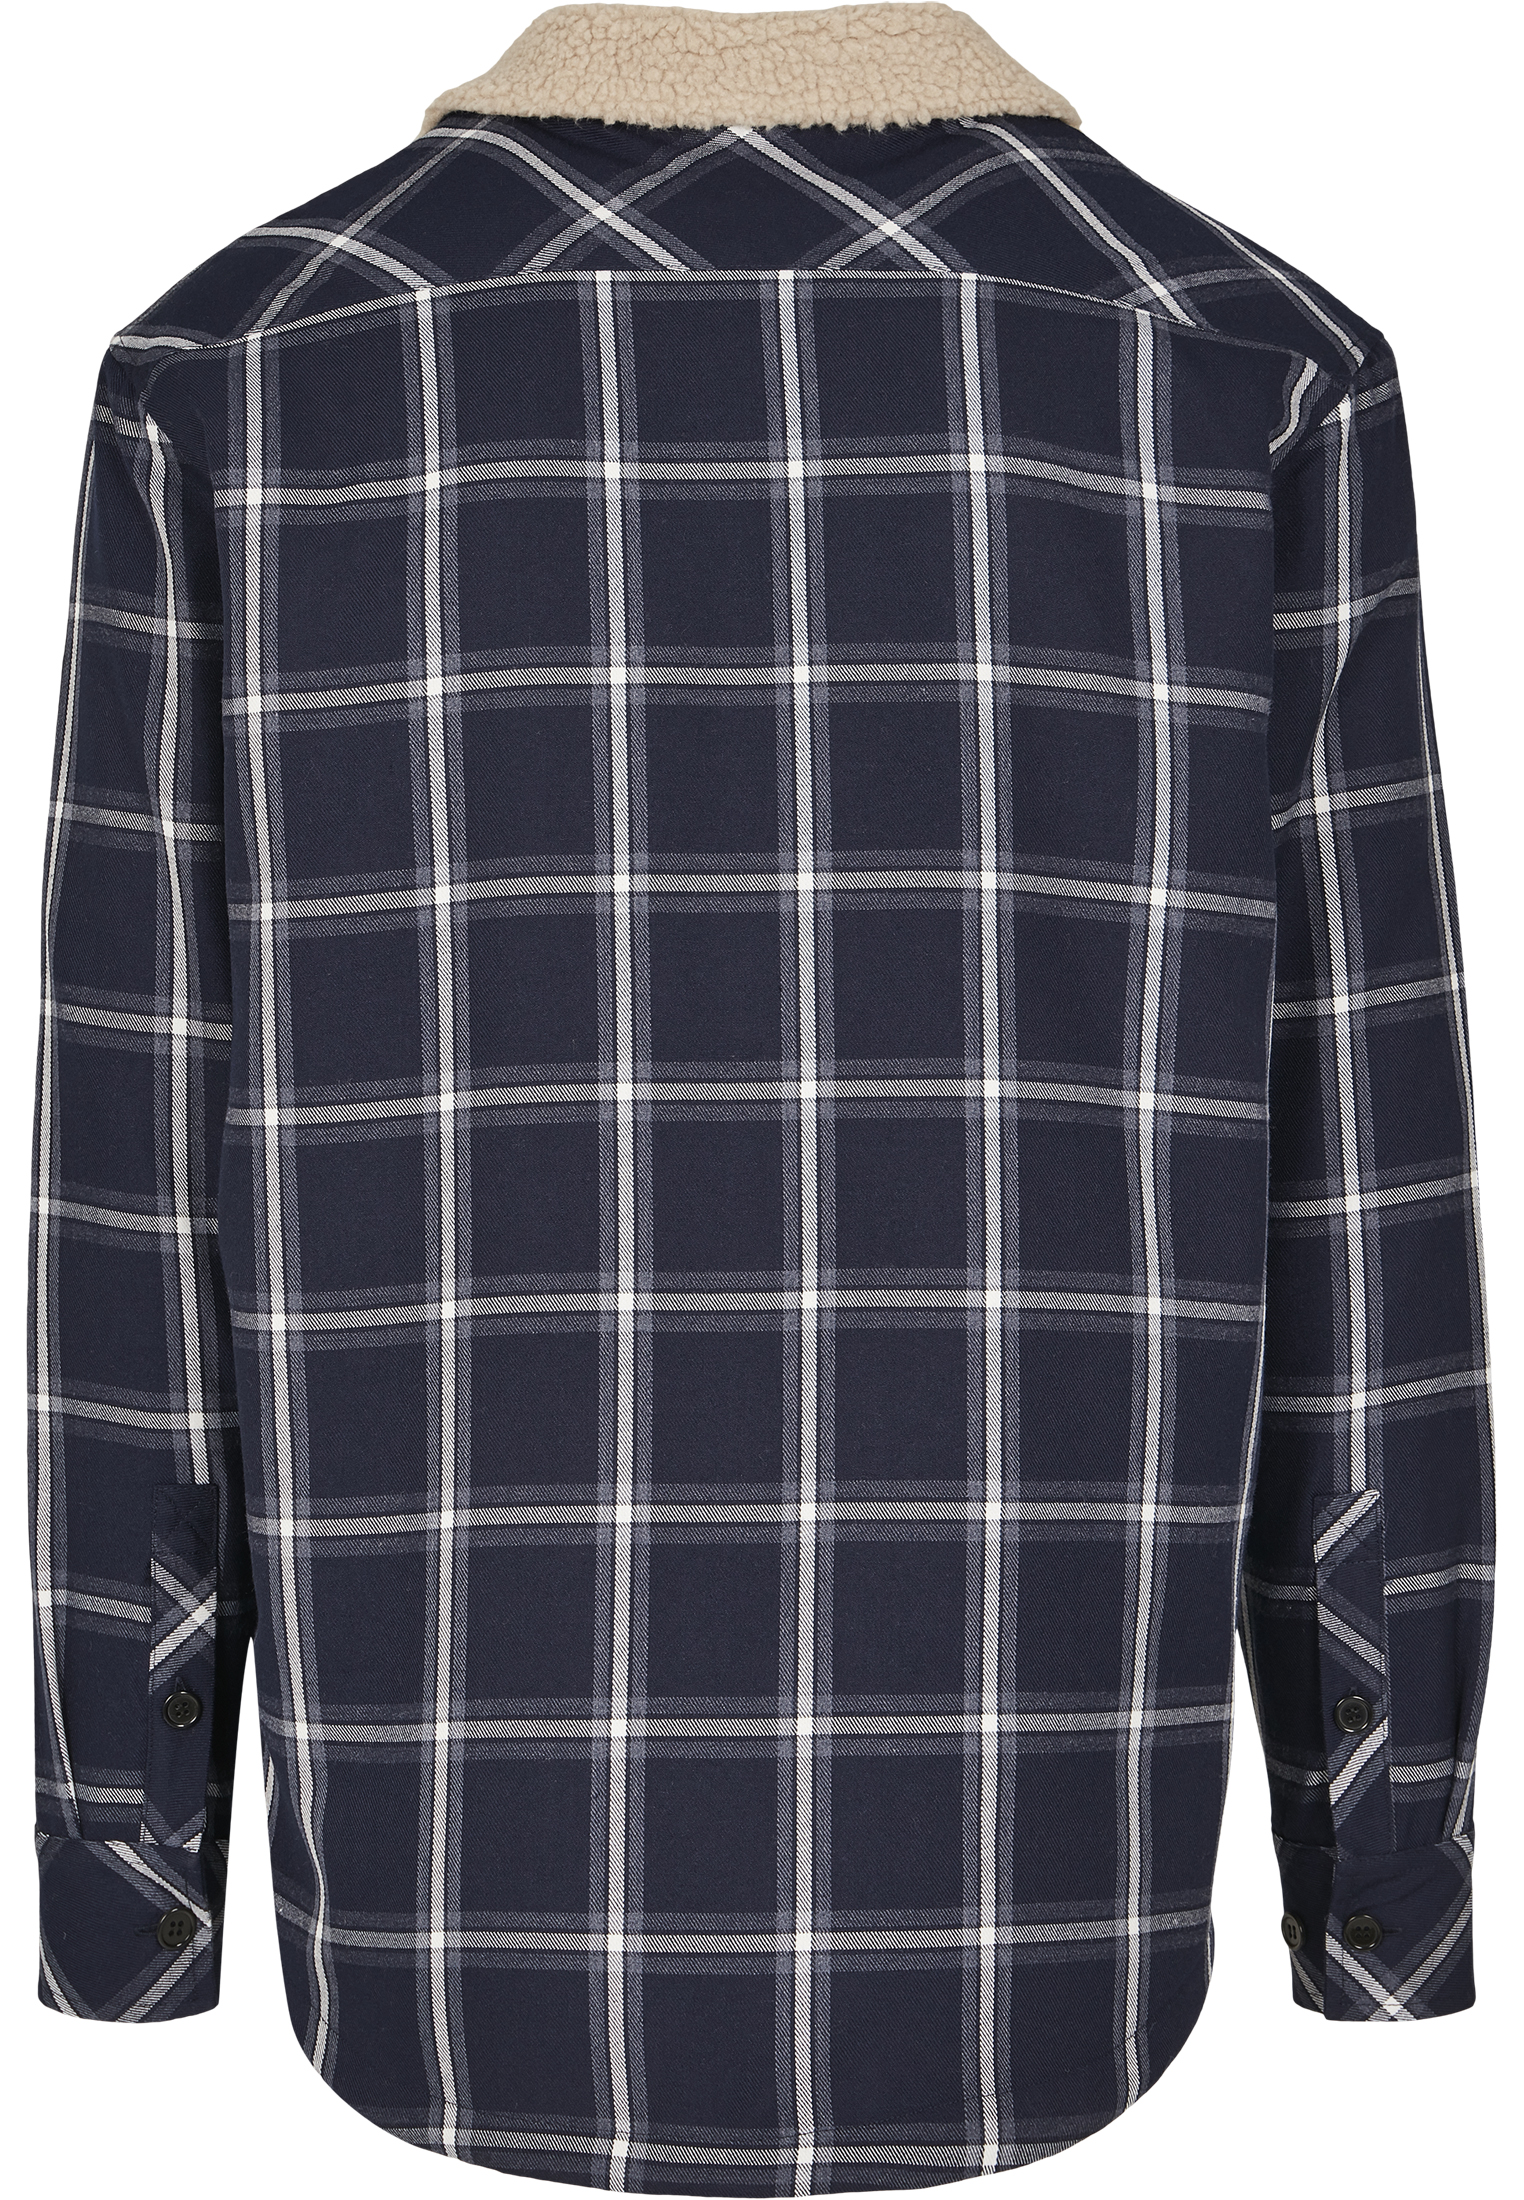 Winter Jacken Sherpa Lined Shirt Jacket in Farbe navy/wht